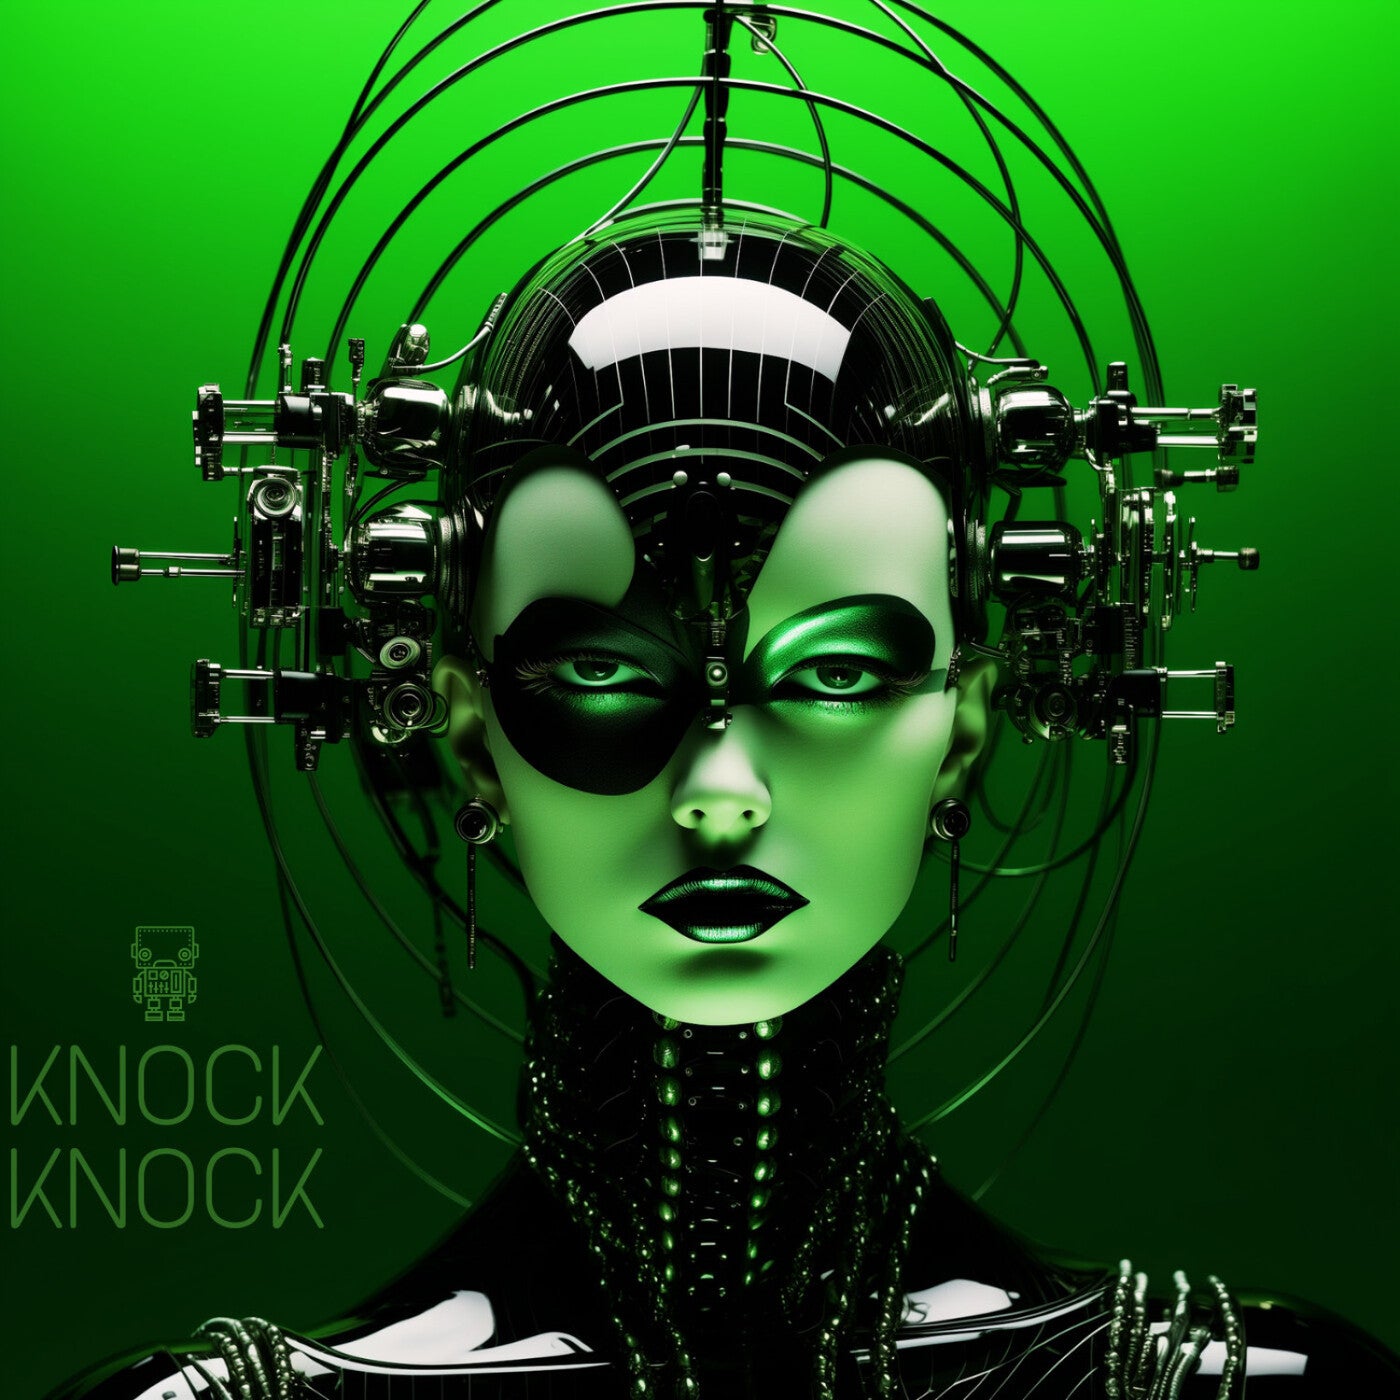 image cover: KARPOVICH, BRK (BR) - KNOCK KNOCK on SAPIENT ROBOTS